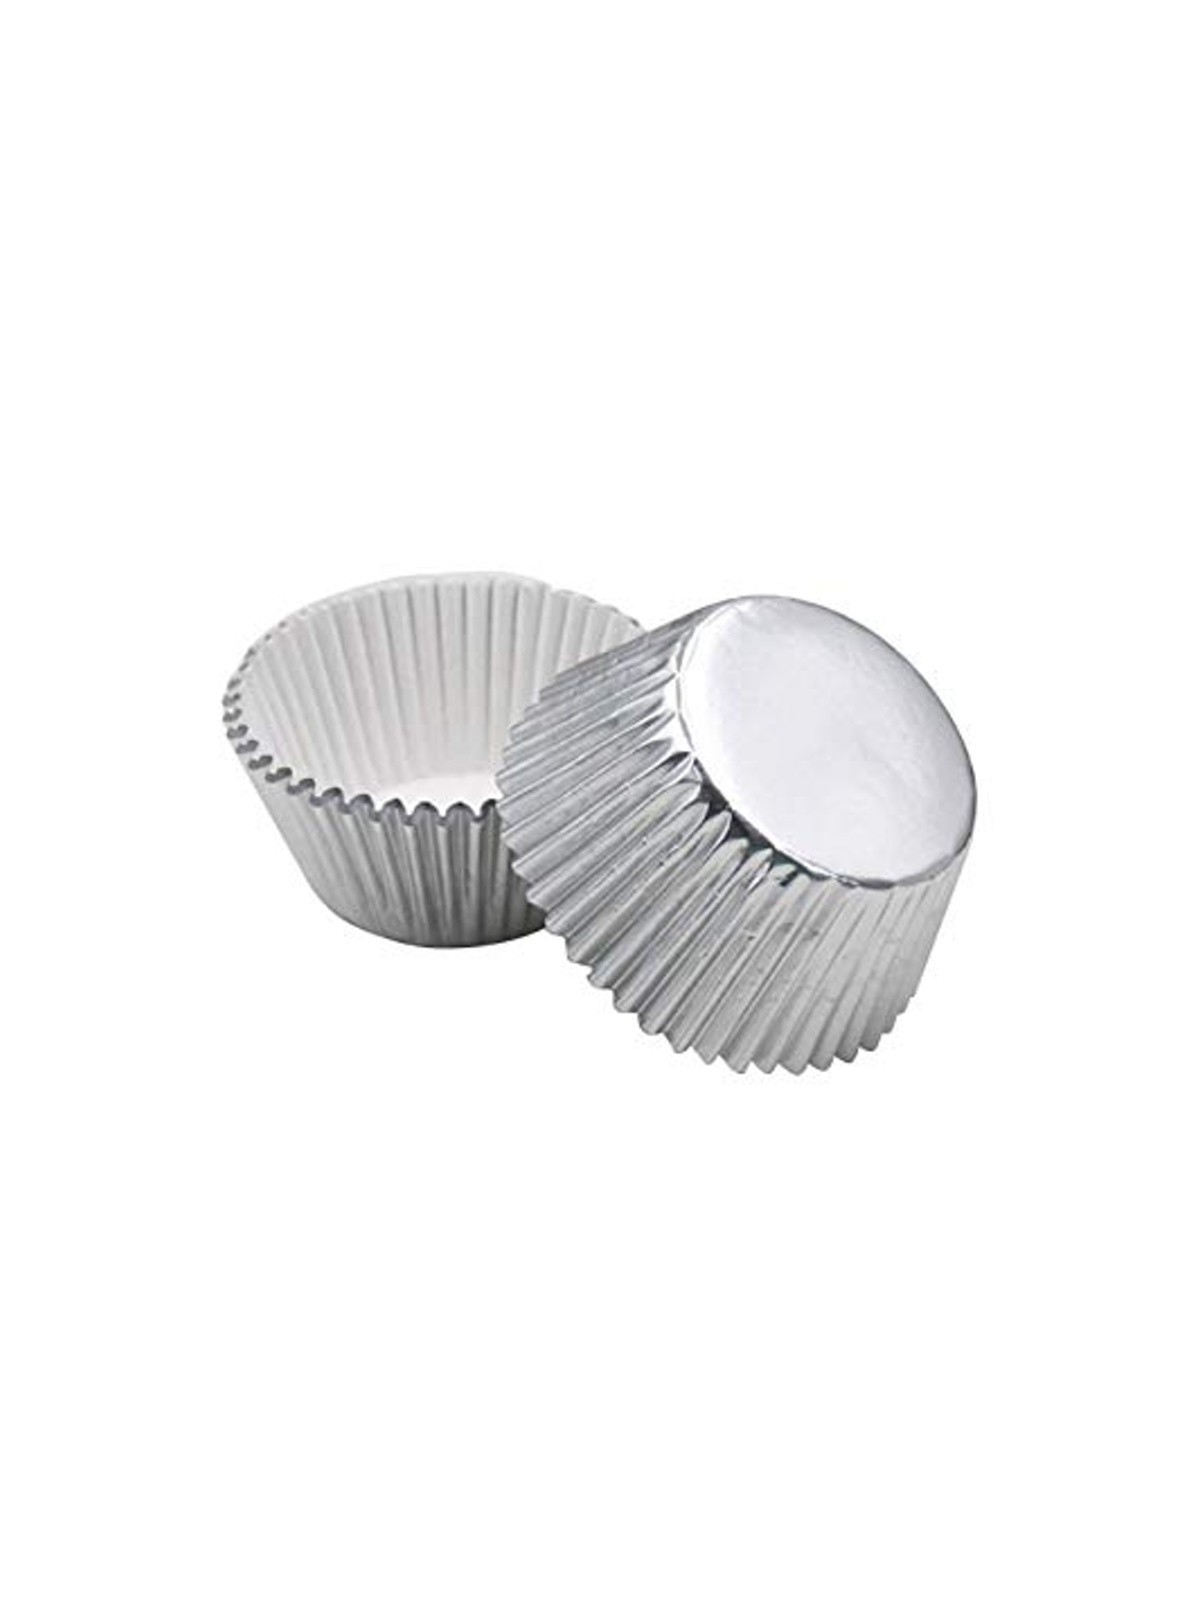 Decora MINI Cupcakes   2,7 x 1,7 cm - Silber - 90-100 Stück